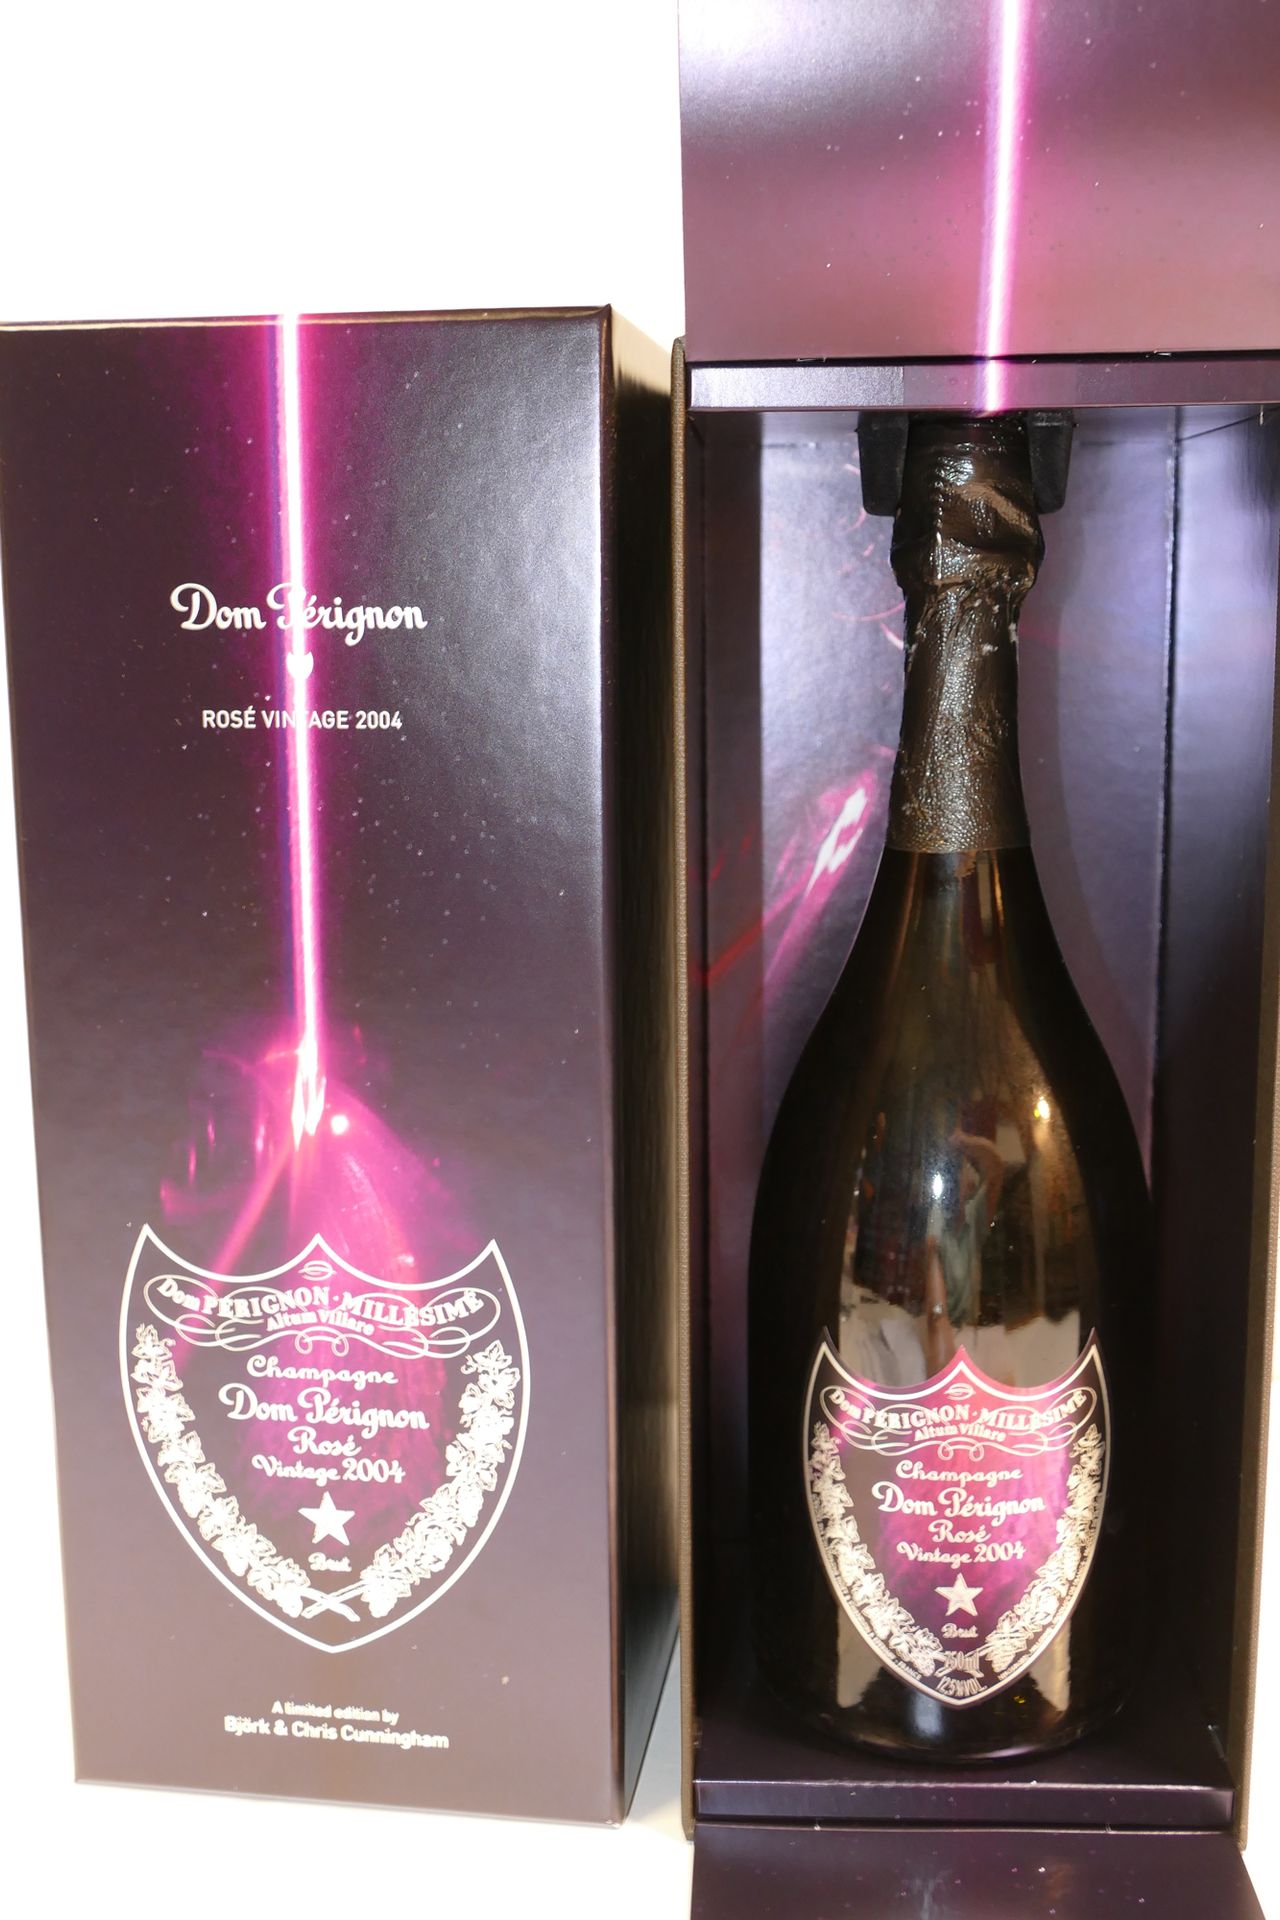 Null 1 Btle Champagne Dom Pérignon rosé 2004 Edición Limitada Björk y Chris Cunn&hellip;